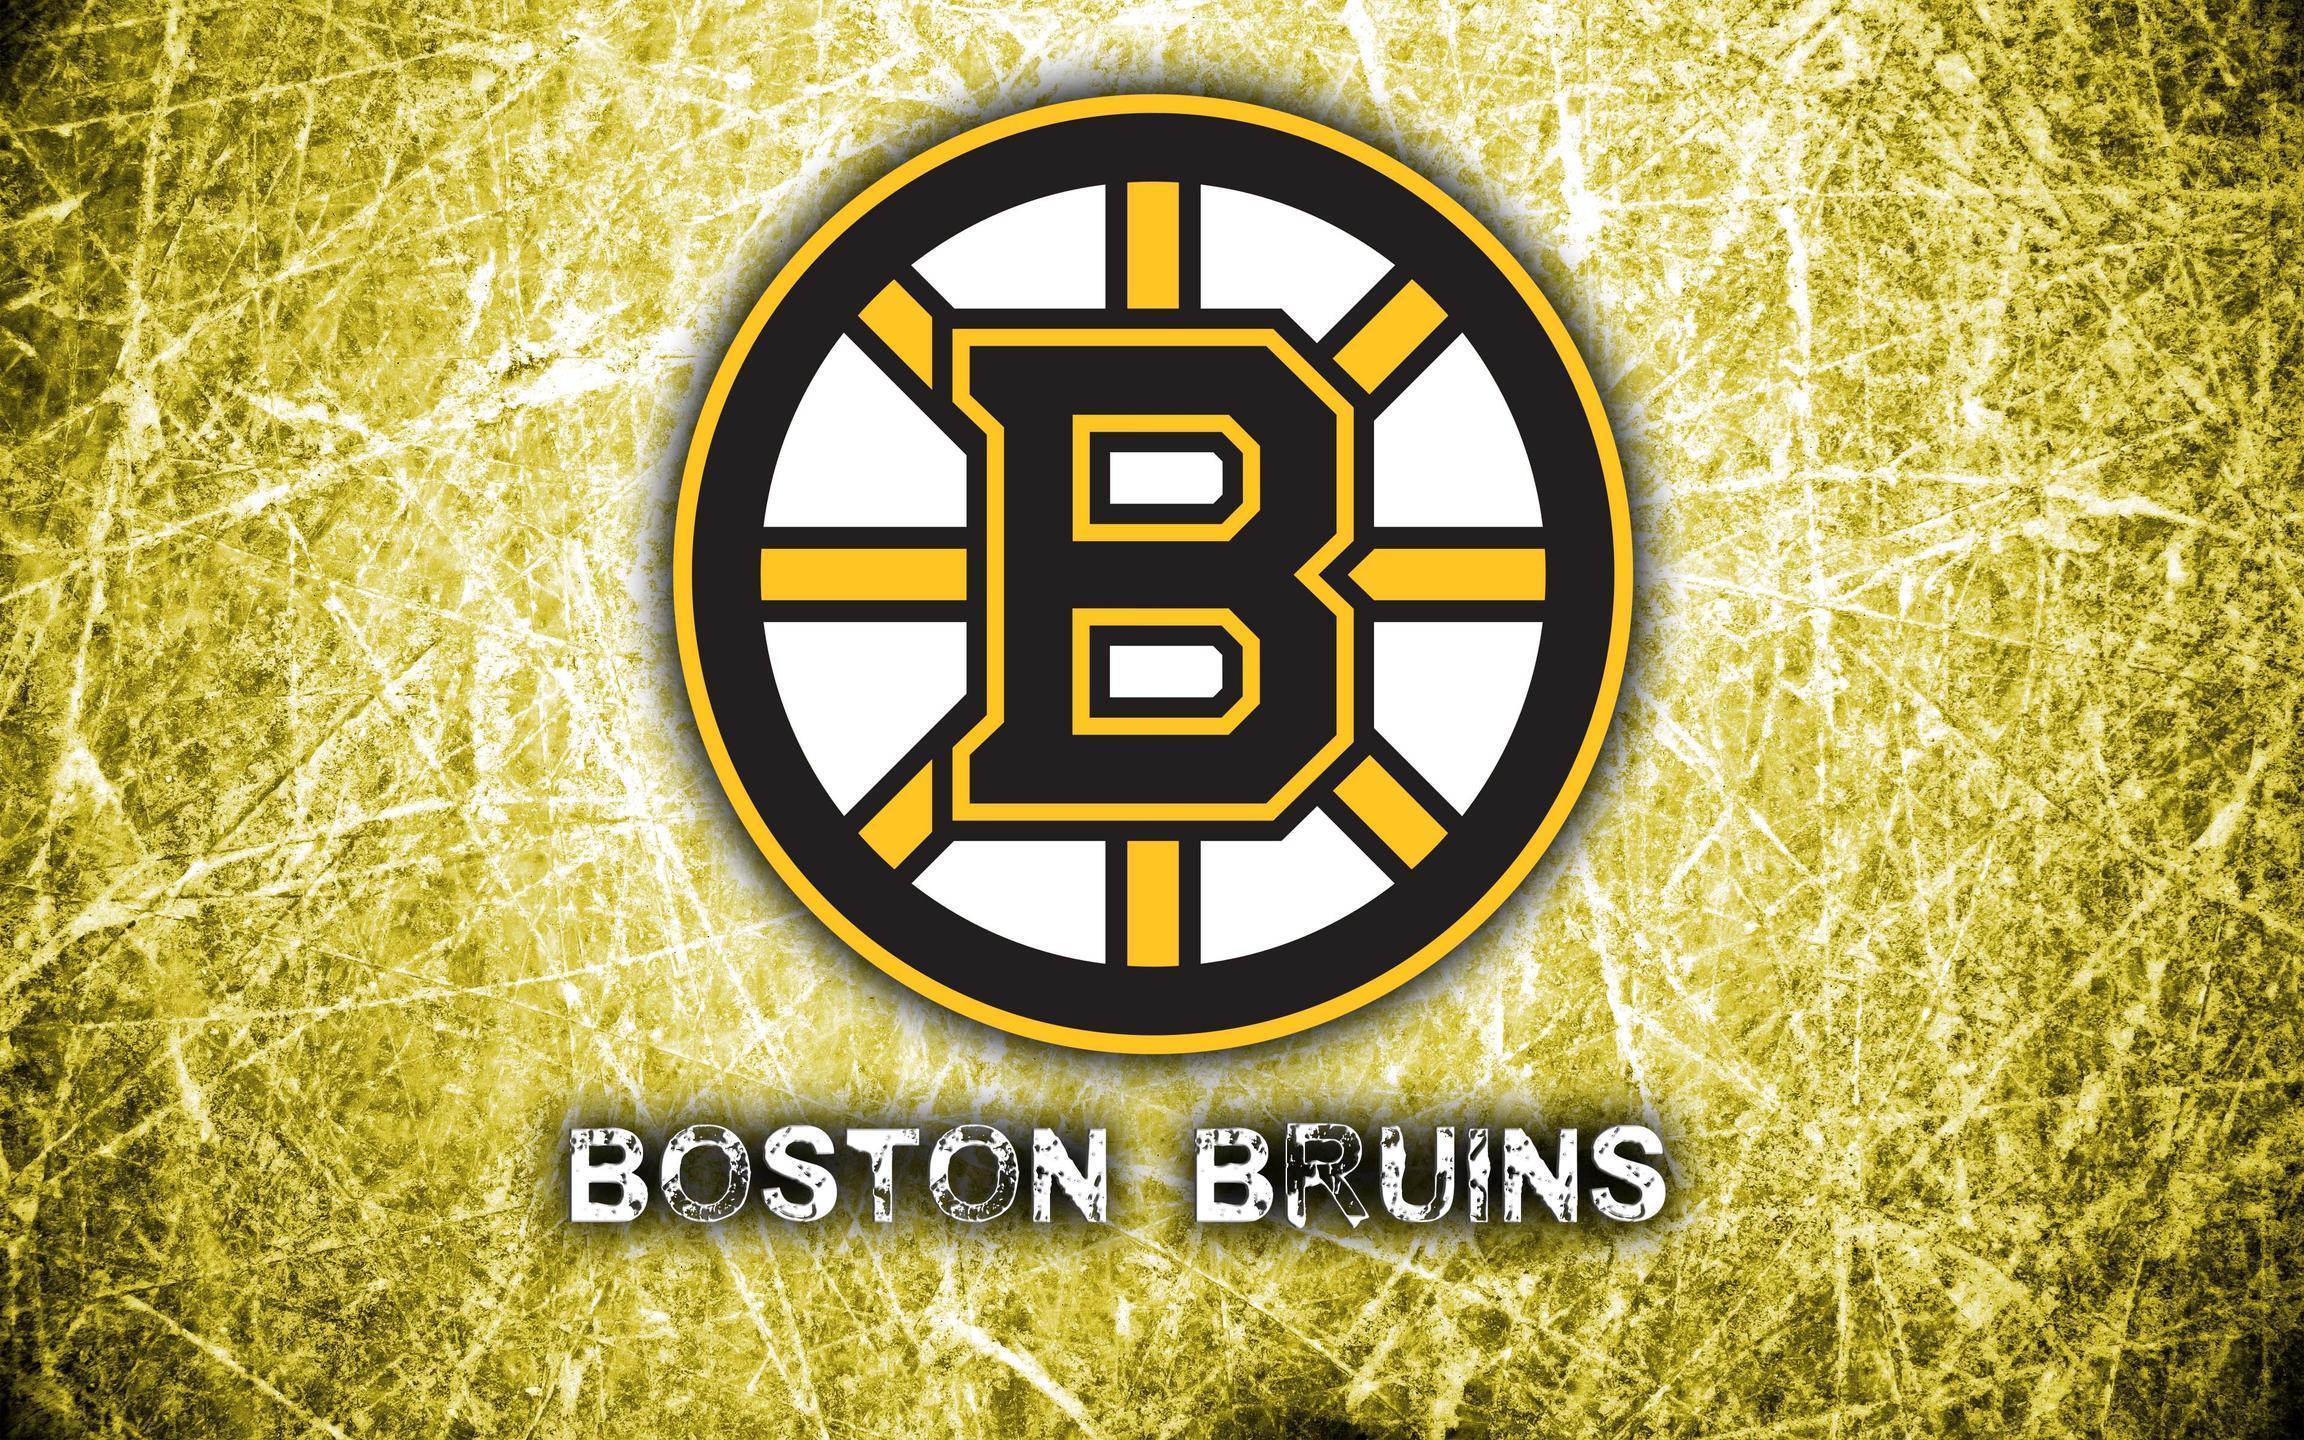 Boston Bruins 2014 Logo Wallpaper Wide or HD